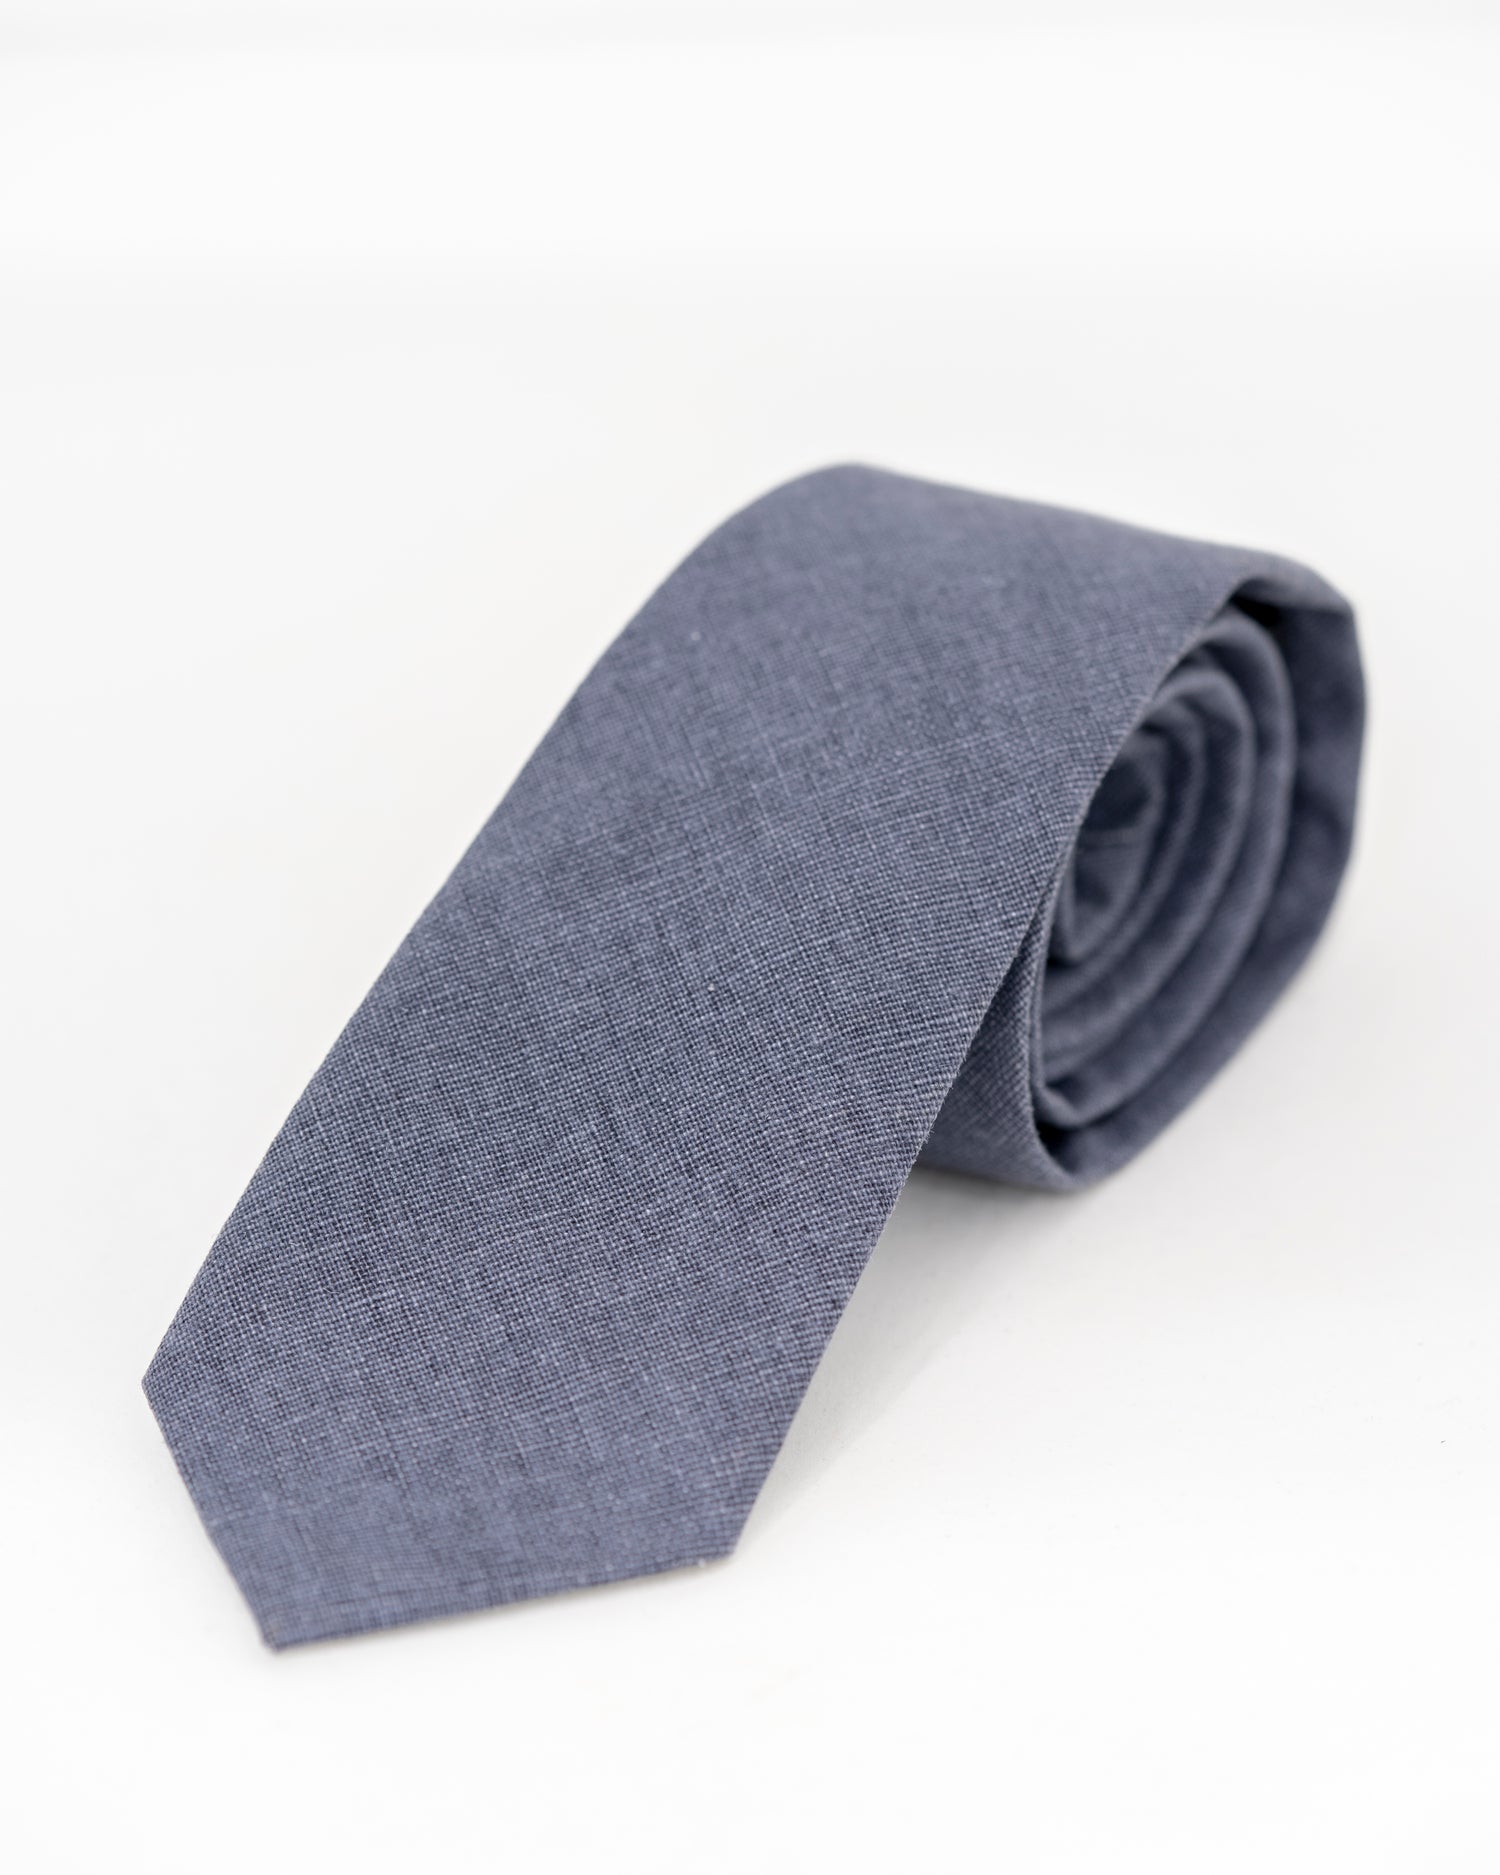 JAY Neck Tie - Cotton/Linen